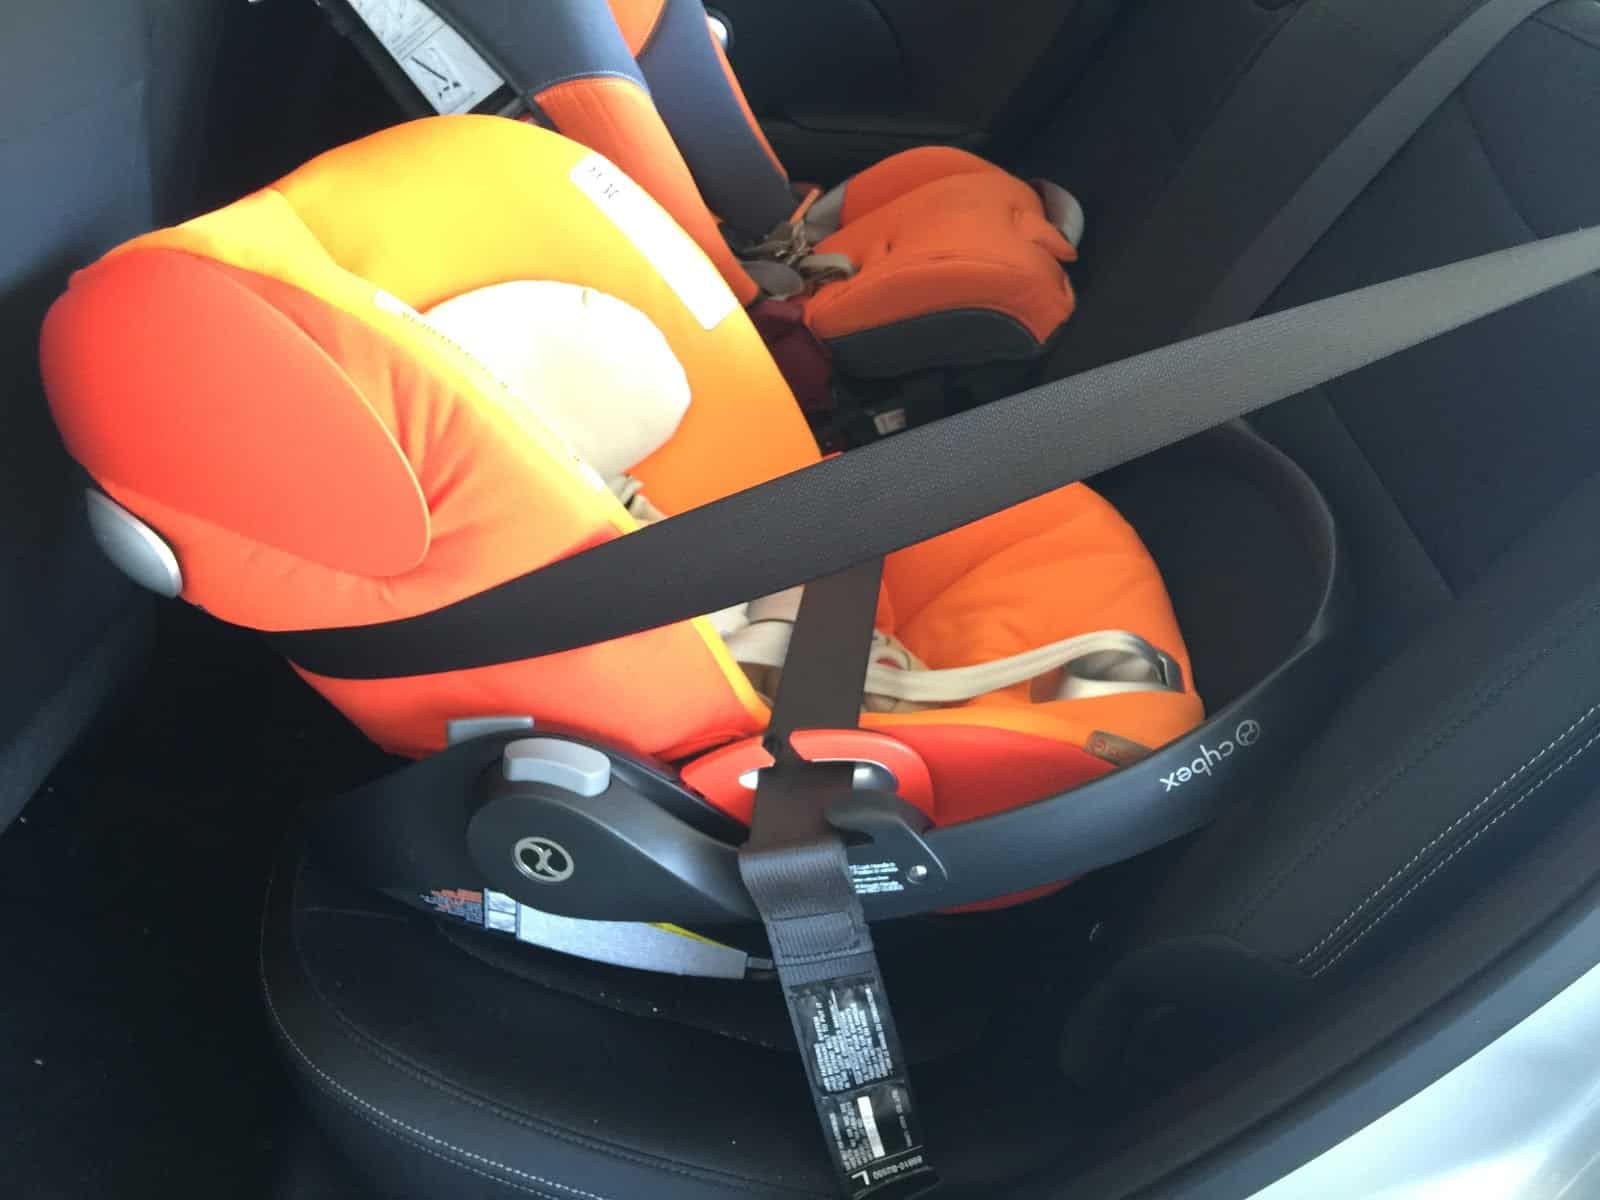 Cybex Cloud Q Review Car Seats For, Cybex Platinum Aton Q Infant Car Seat Manual